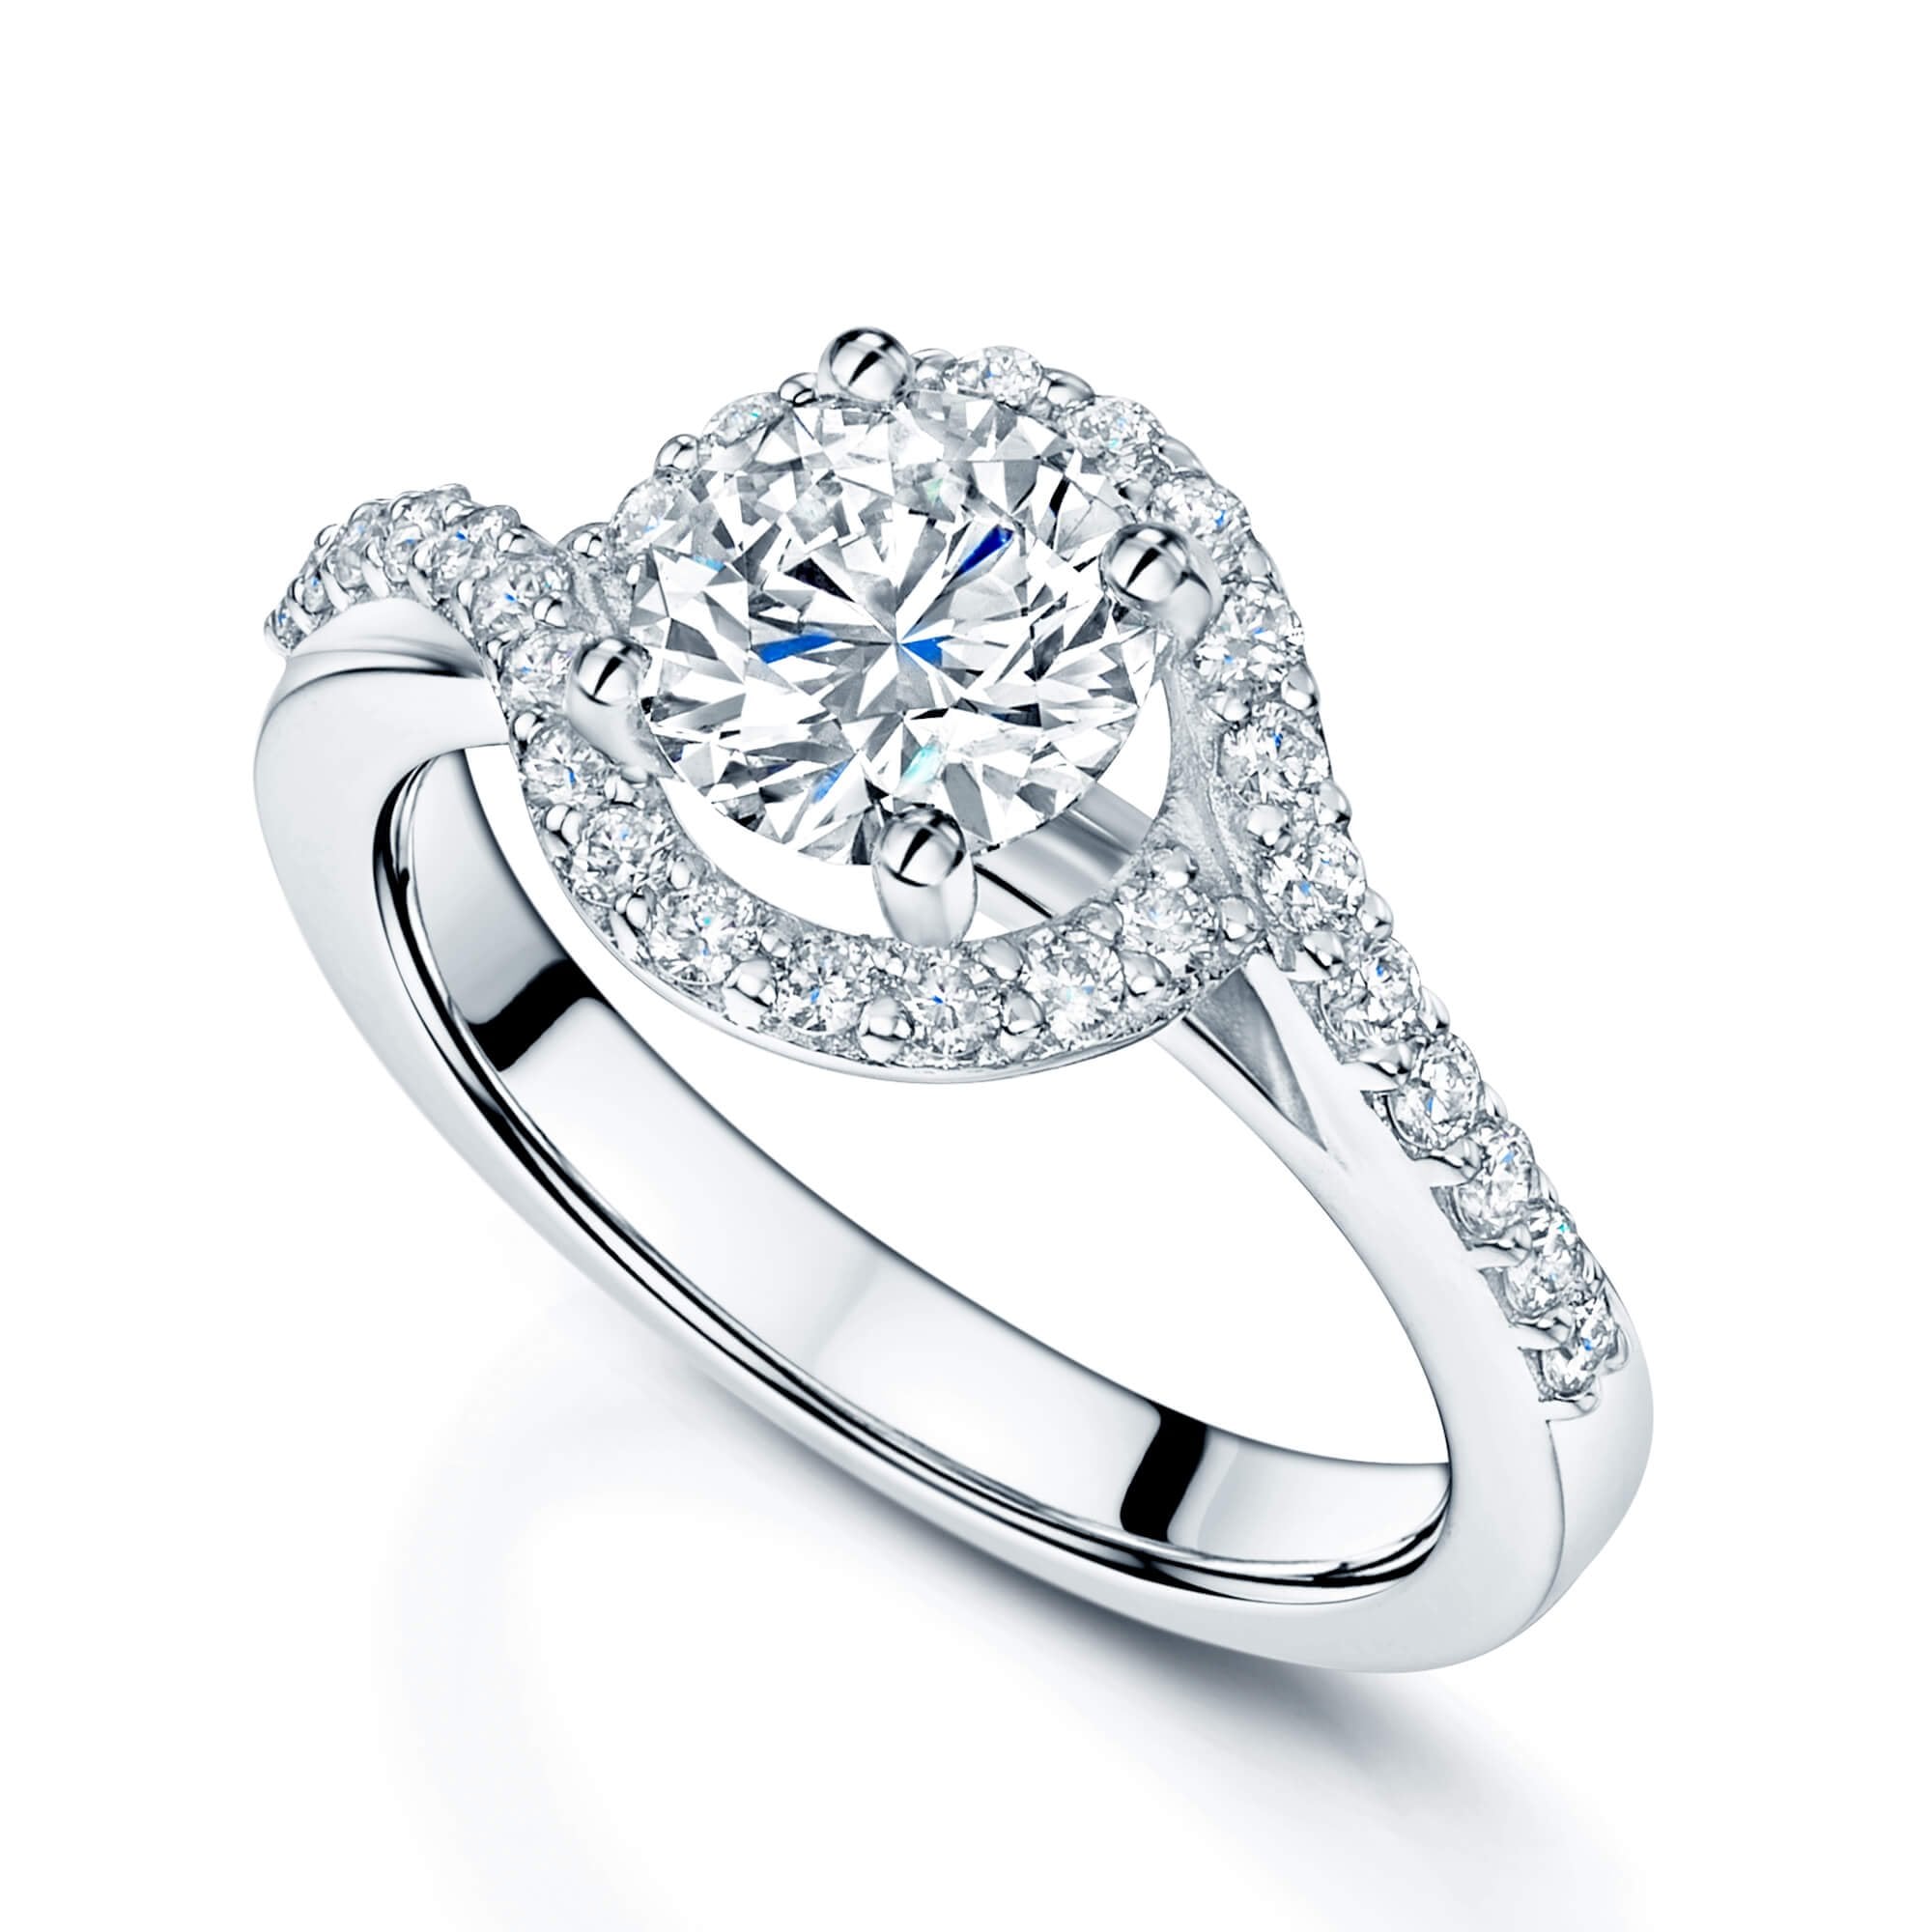 Platinum GIA Certificated Round Brilliant Cut Diamond Ring With Twist Diamond Shoulders